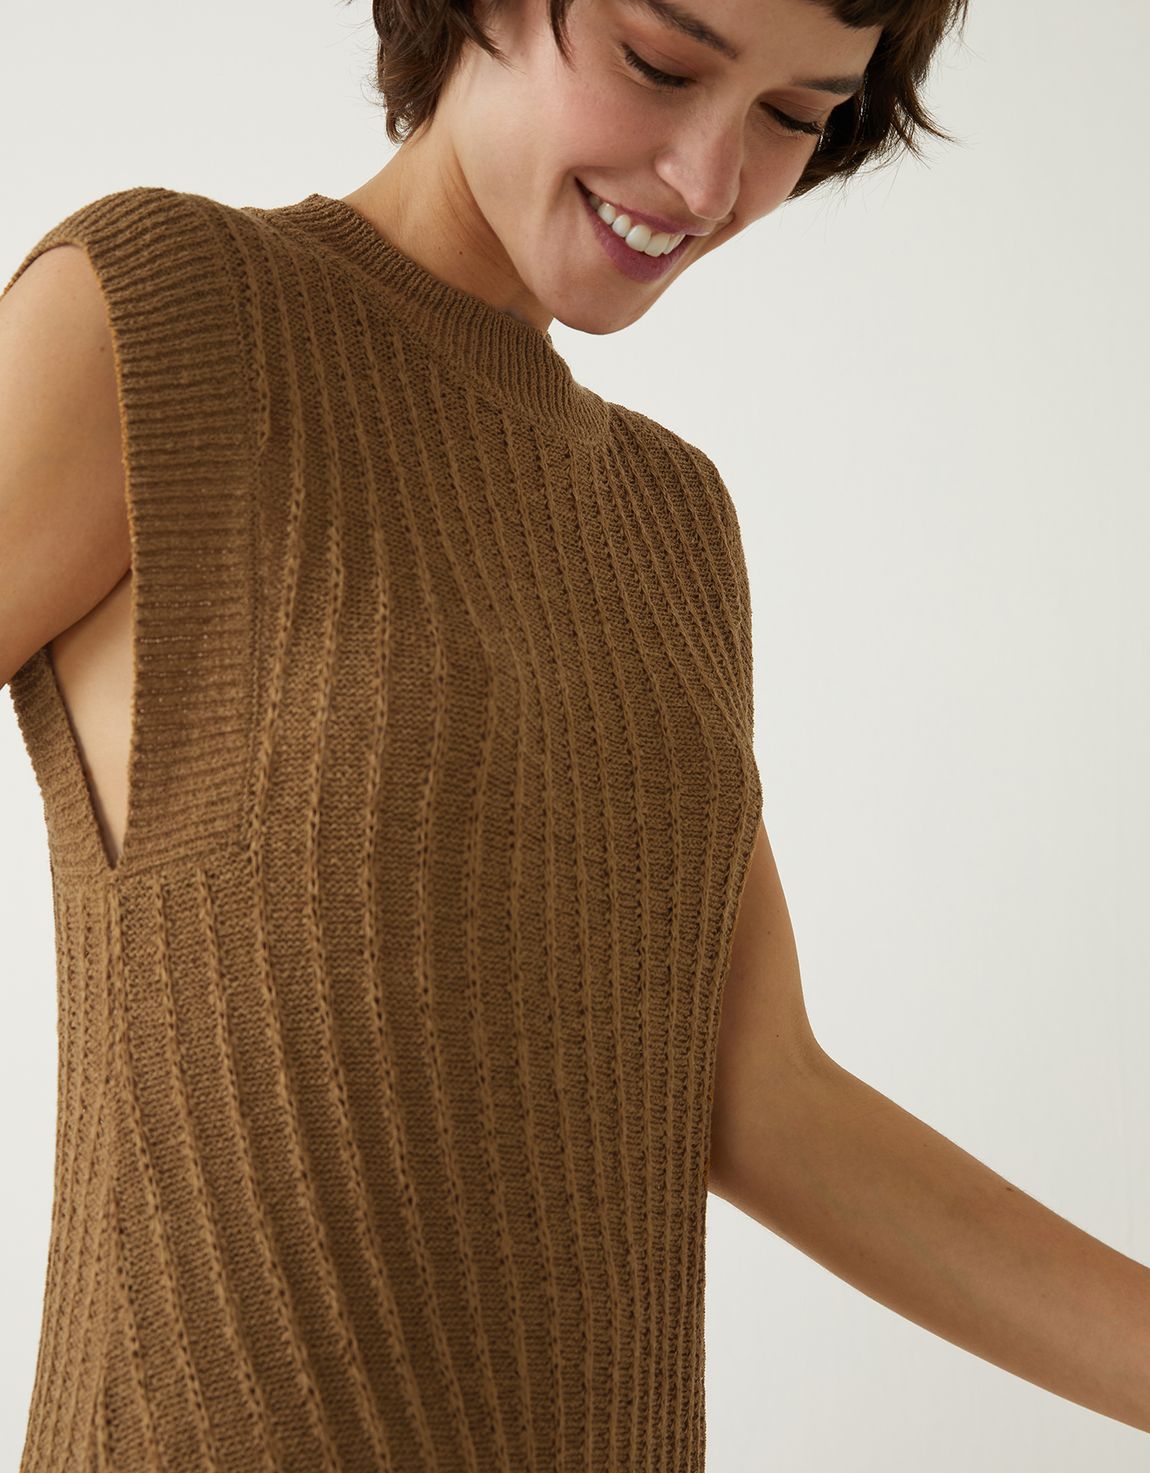 Blusa túnica tricot textura